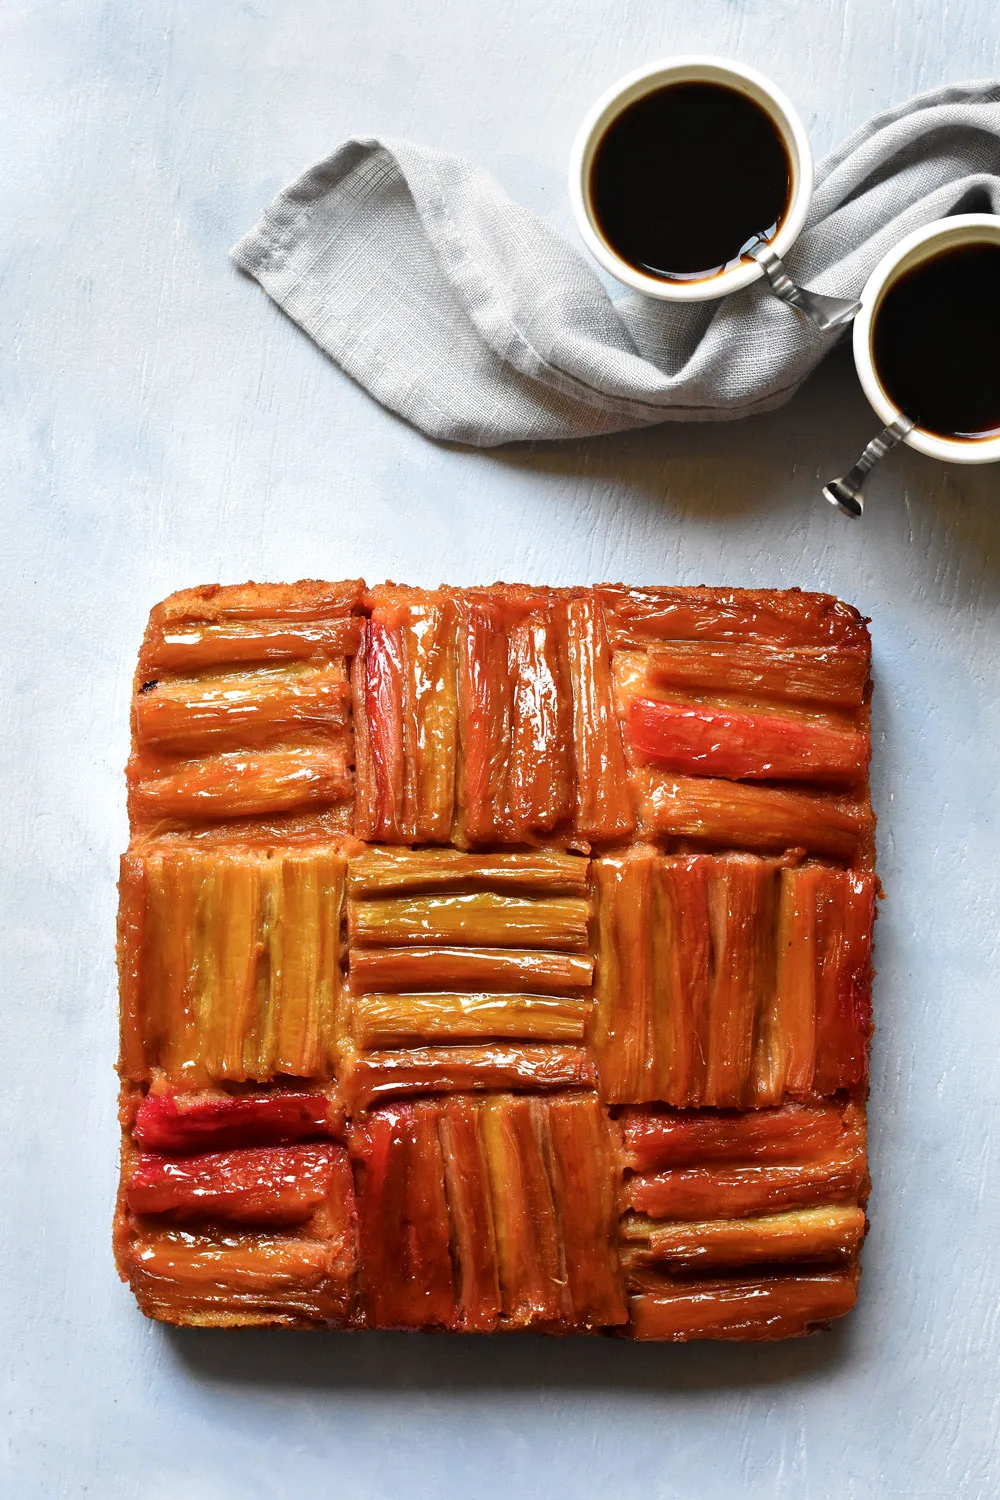 Simple Rhubarb Tatin Cake by Pardon Your French // FoodNouveau.com